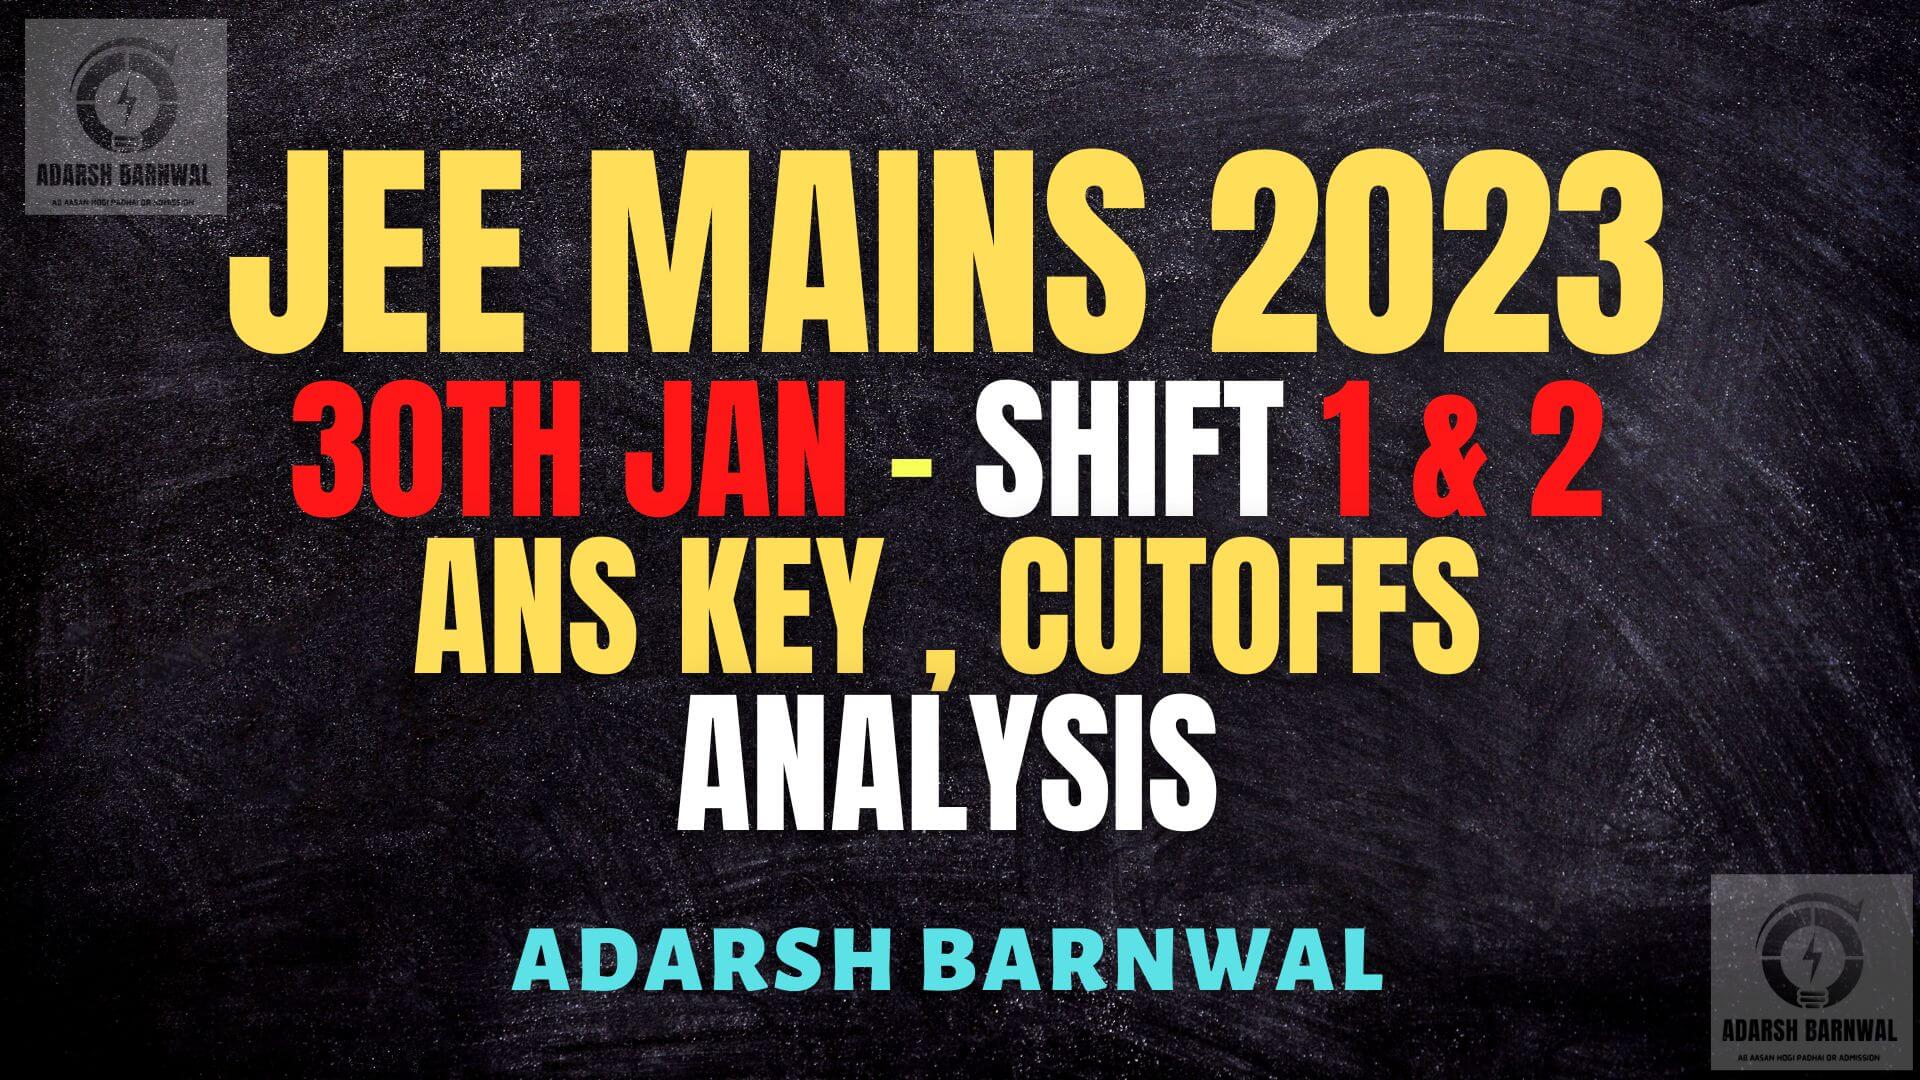 Jee Mains 2023 January 30 shift 1 & Shift 2 analysis ,Answer key , Expected cutoffs by adarsh barnwal